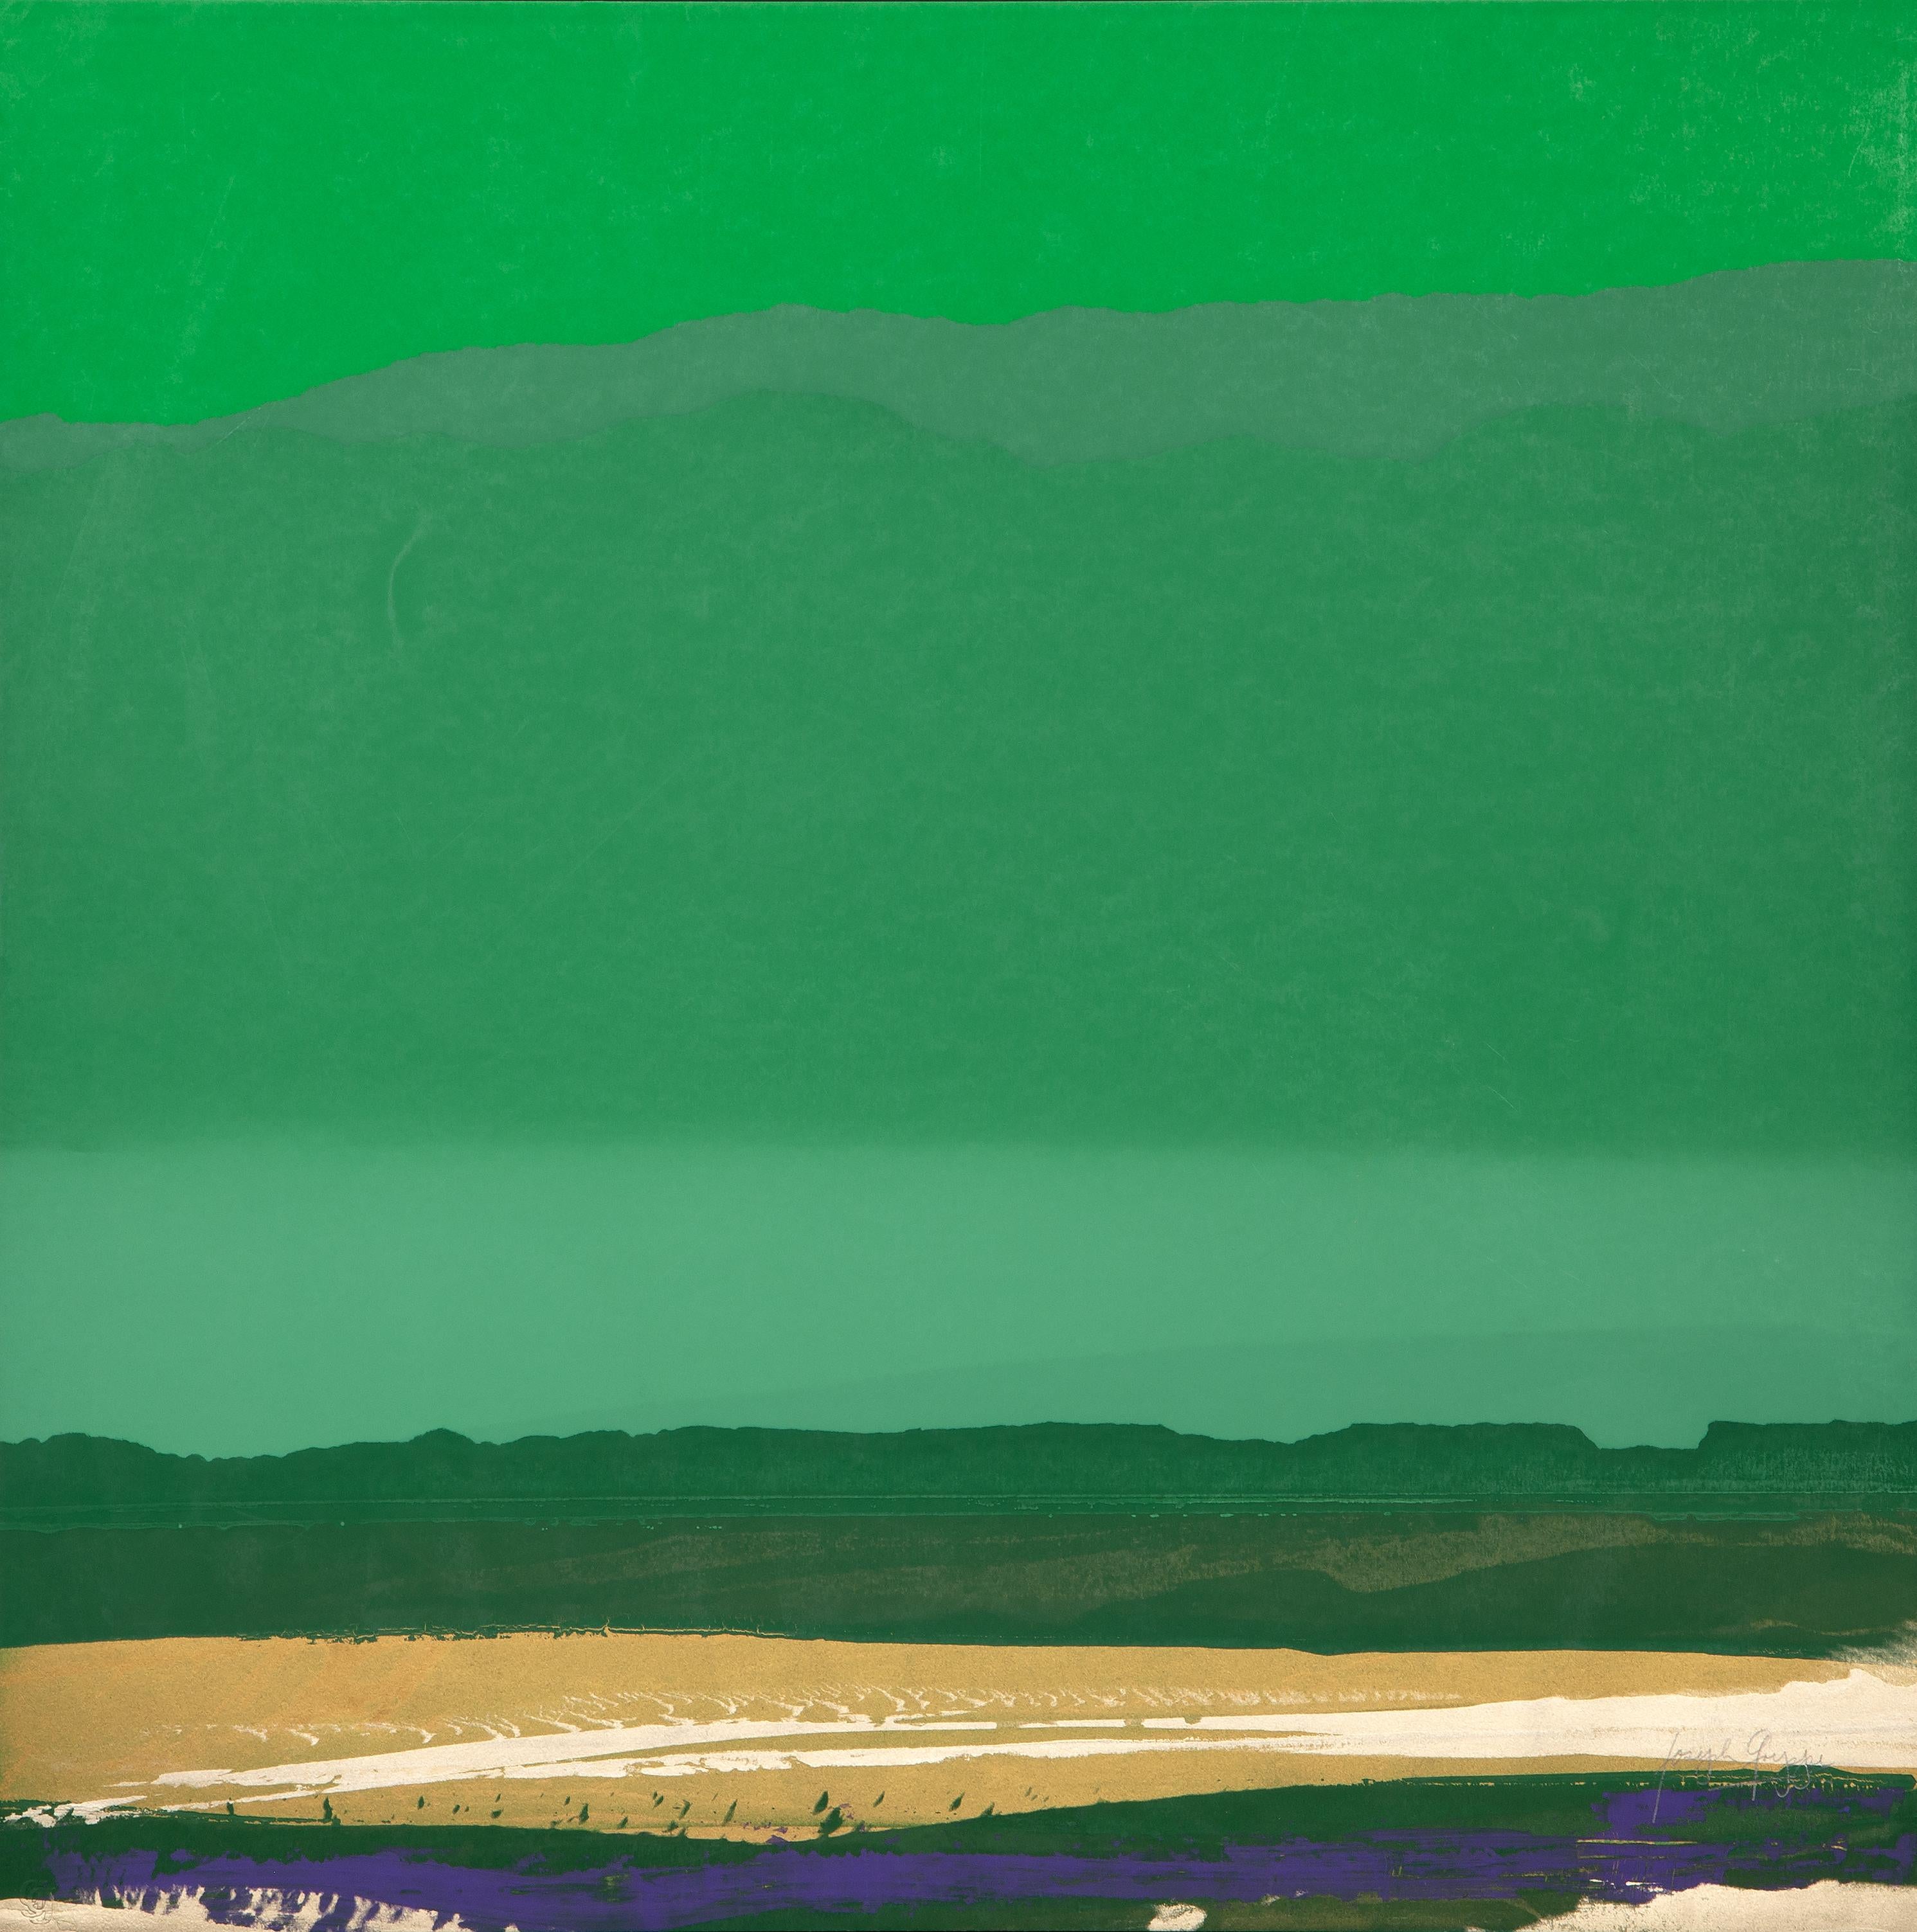 Green, Gold, Blue Landscape
Joseph Grippi, American (1924–2001)
Screenprint Monoprint, signed in pencil lower right
Size: 30 x 30 in. (76.2 x 76.2 cm)